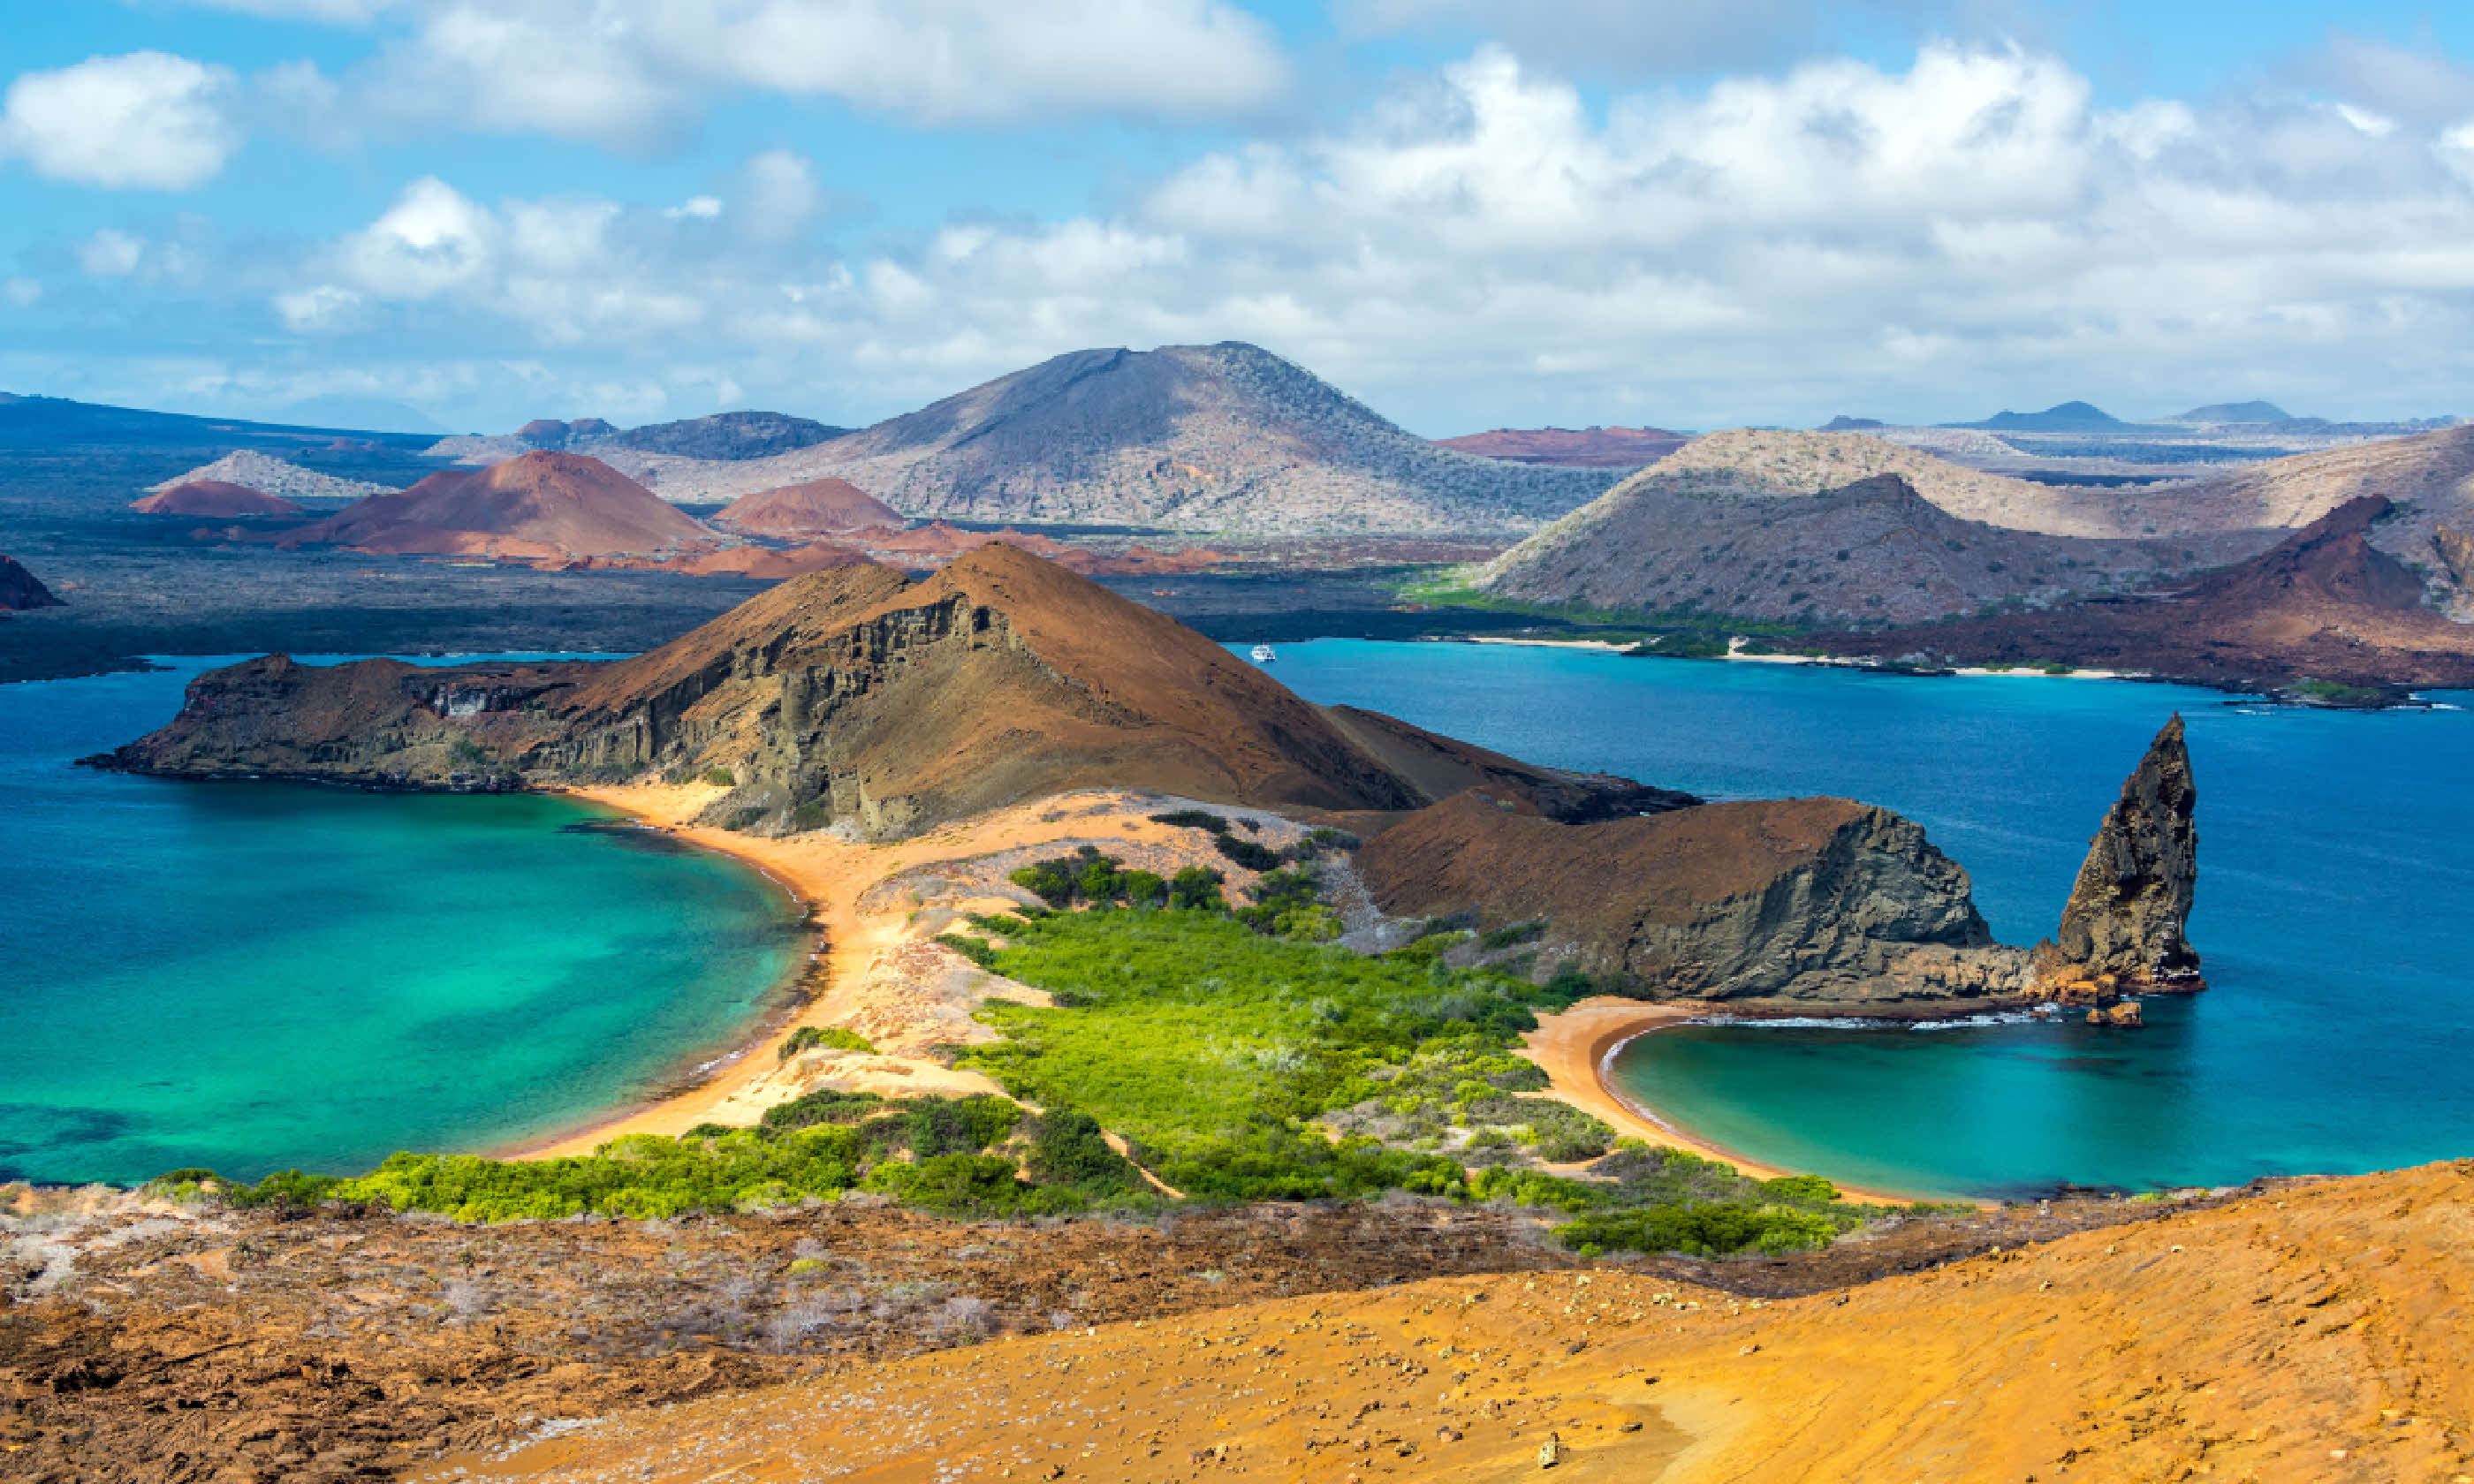 Bartolome Island in the Galapagos Islands (Shutterstock)